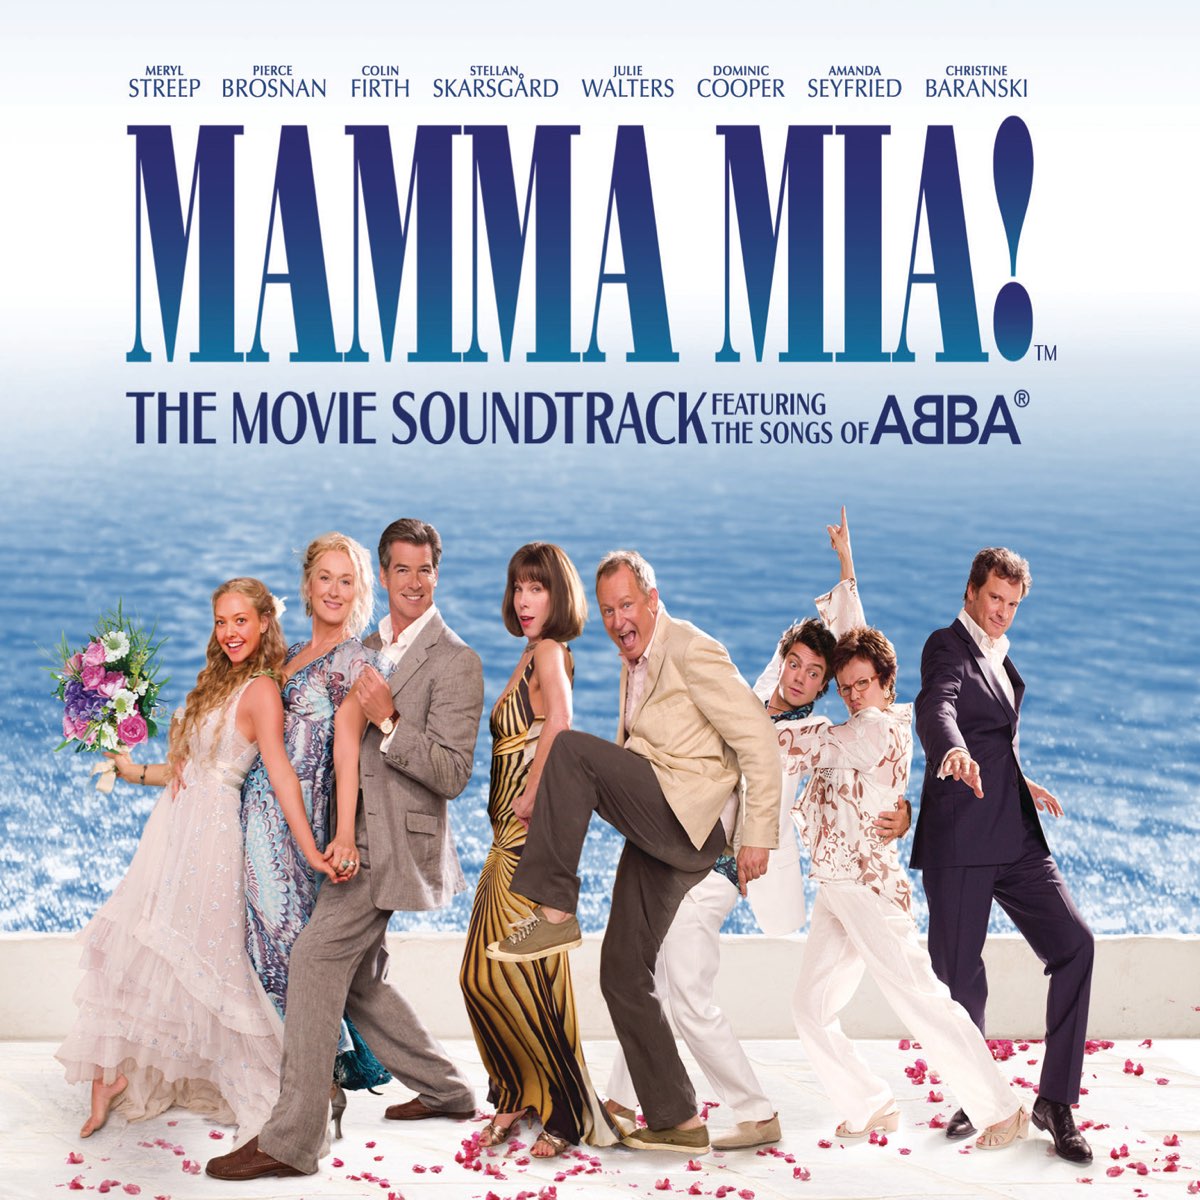 Mamma Mia! (The Movie Soundtrack feat. the Songs of ABBA) [Bonus Track  Version] by Benny Andersson, Björn Ulvaeus, Meryl Streep & Amanda Seyfried  on Apple Music